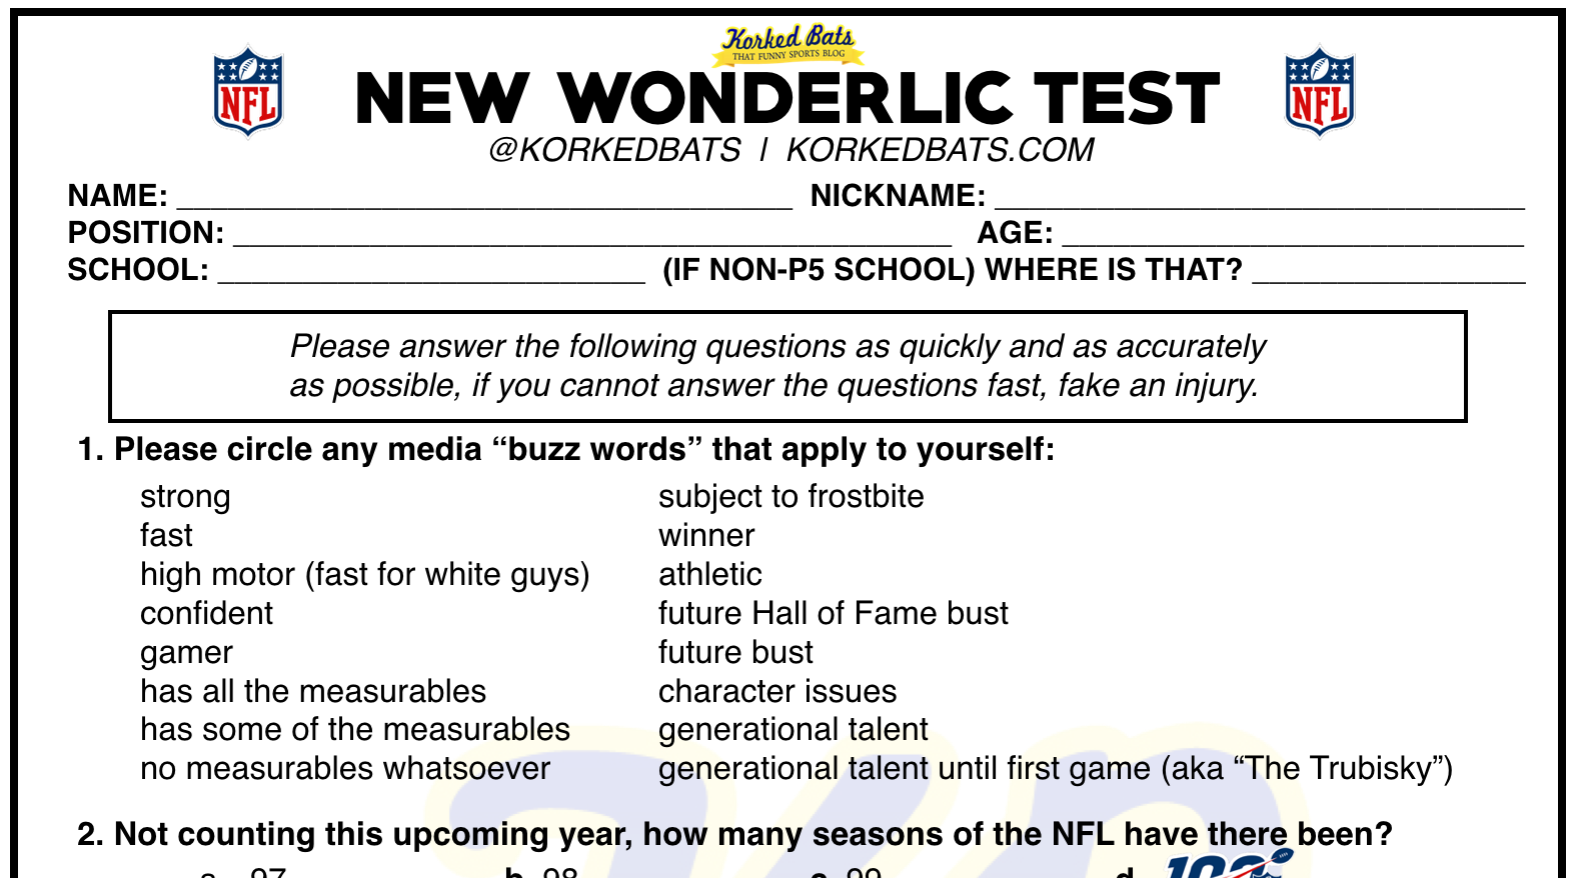 The NFL's New Wonderlic Test 2020 Korked Bats